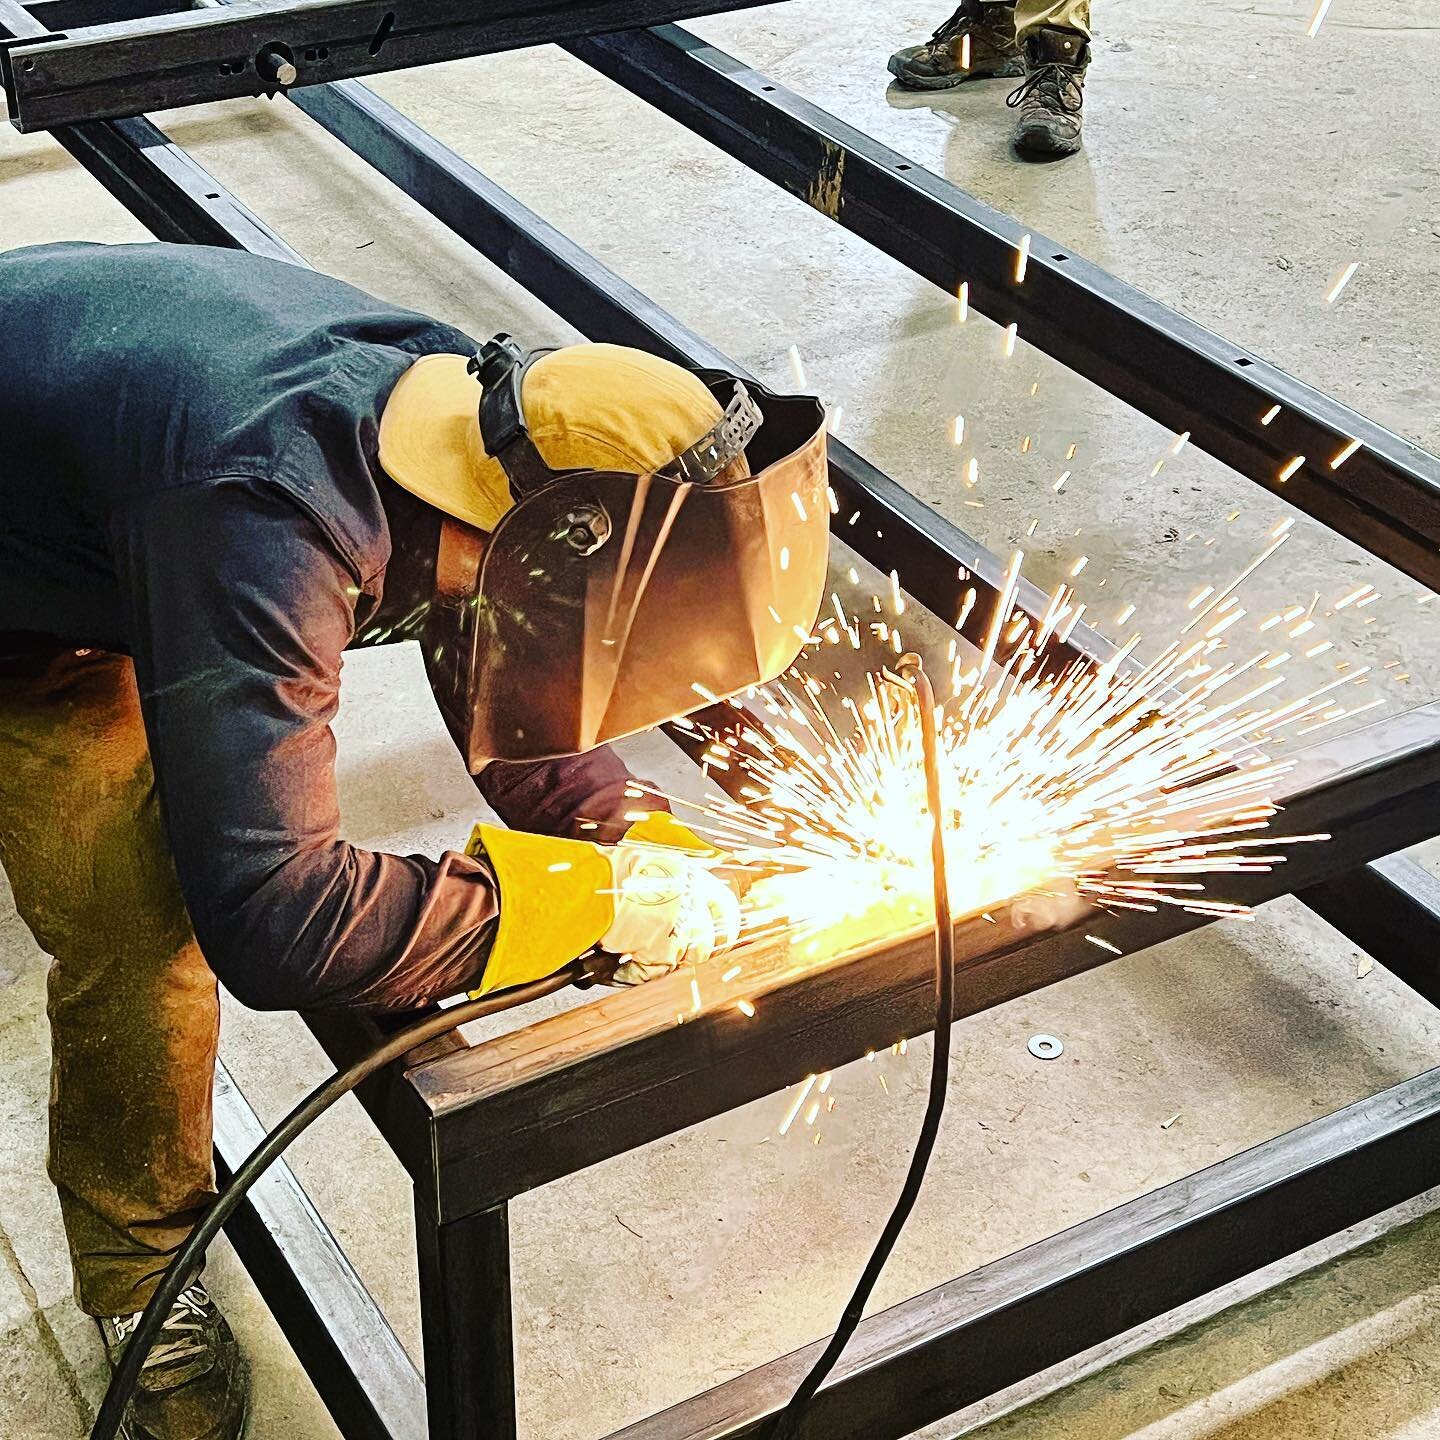 BTS crafting frame for a custom automatic transfer conveyor.
.
.
.
#welding #welder #transferconveyor #conveyor #conveyors #conveyorsystems #metalwork #metalworker #metalworkshop #automation #woodworkingmachinery #lumbermachine #woodmachinery #woodma